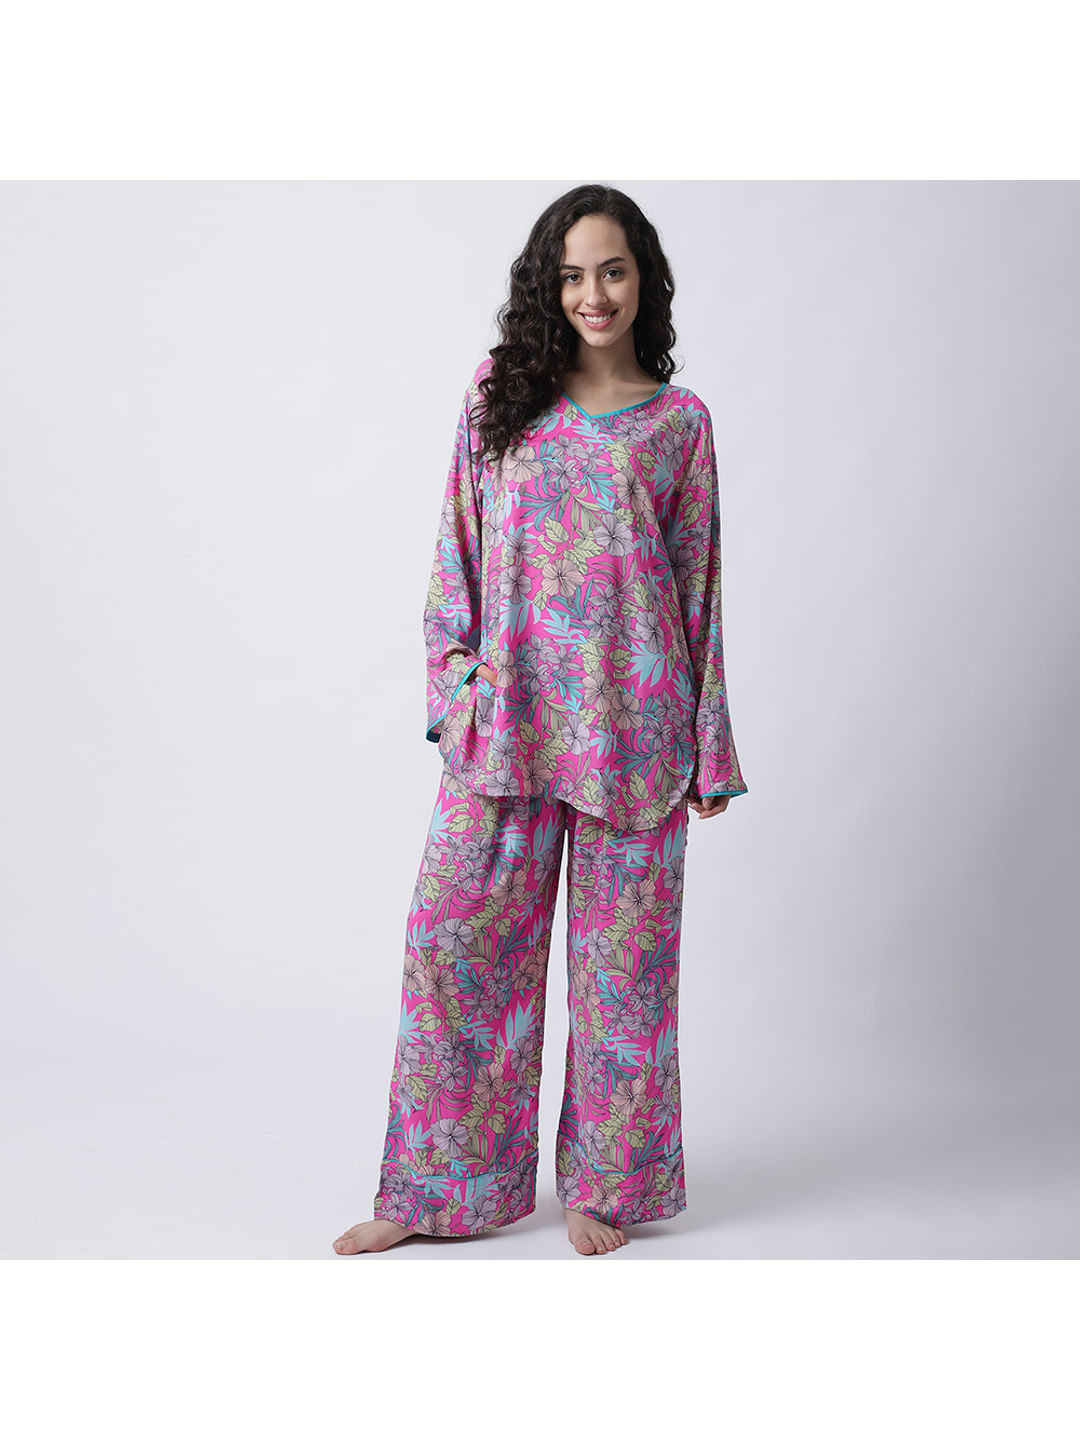 Buy Rayon Pink Botanical Printed Night Suit set of Top & Pyjama trouser for  Women at Secret Wish